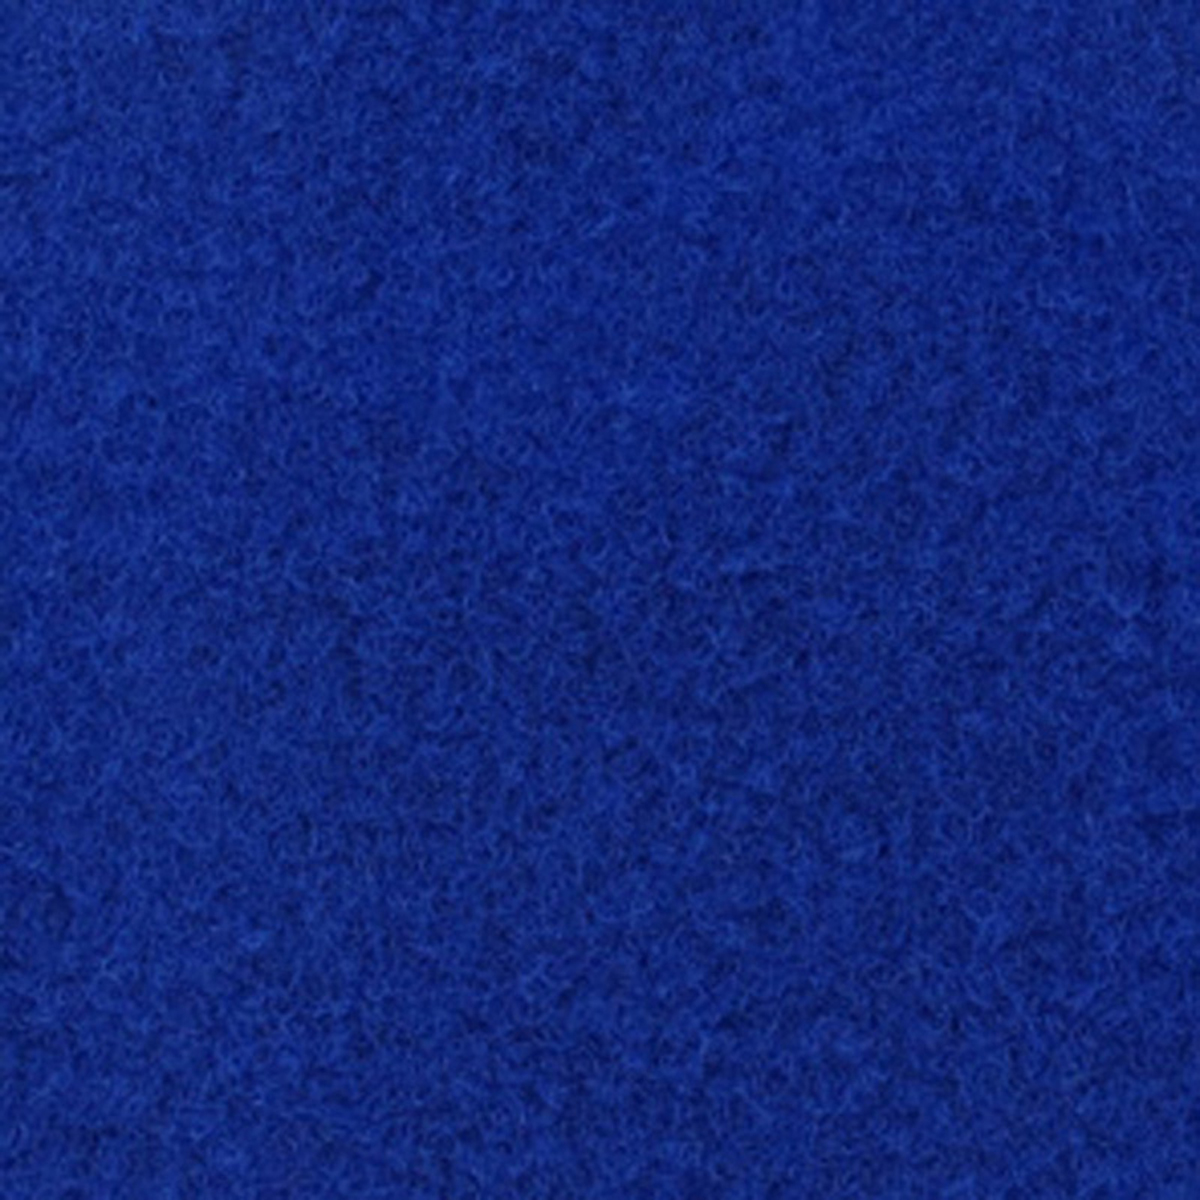 Premium carpet - Royal blue